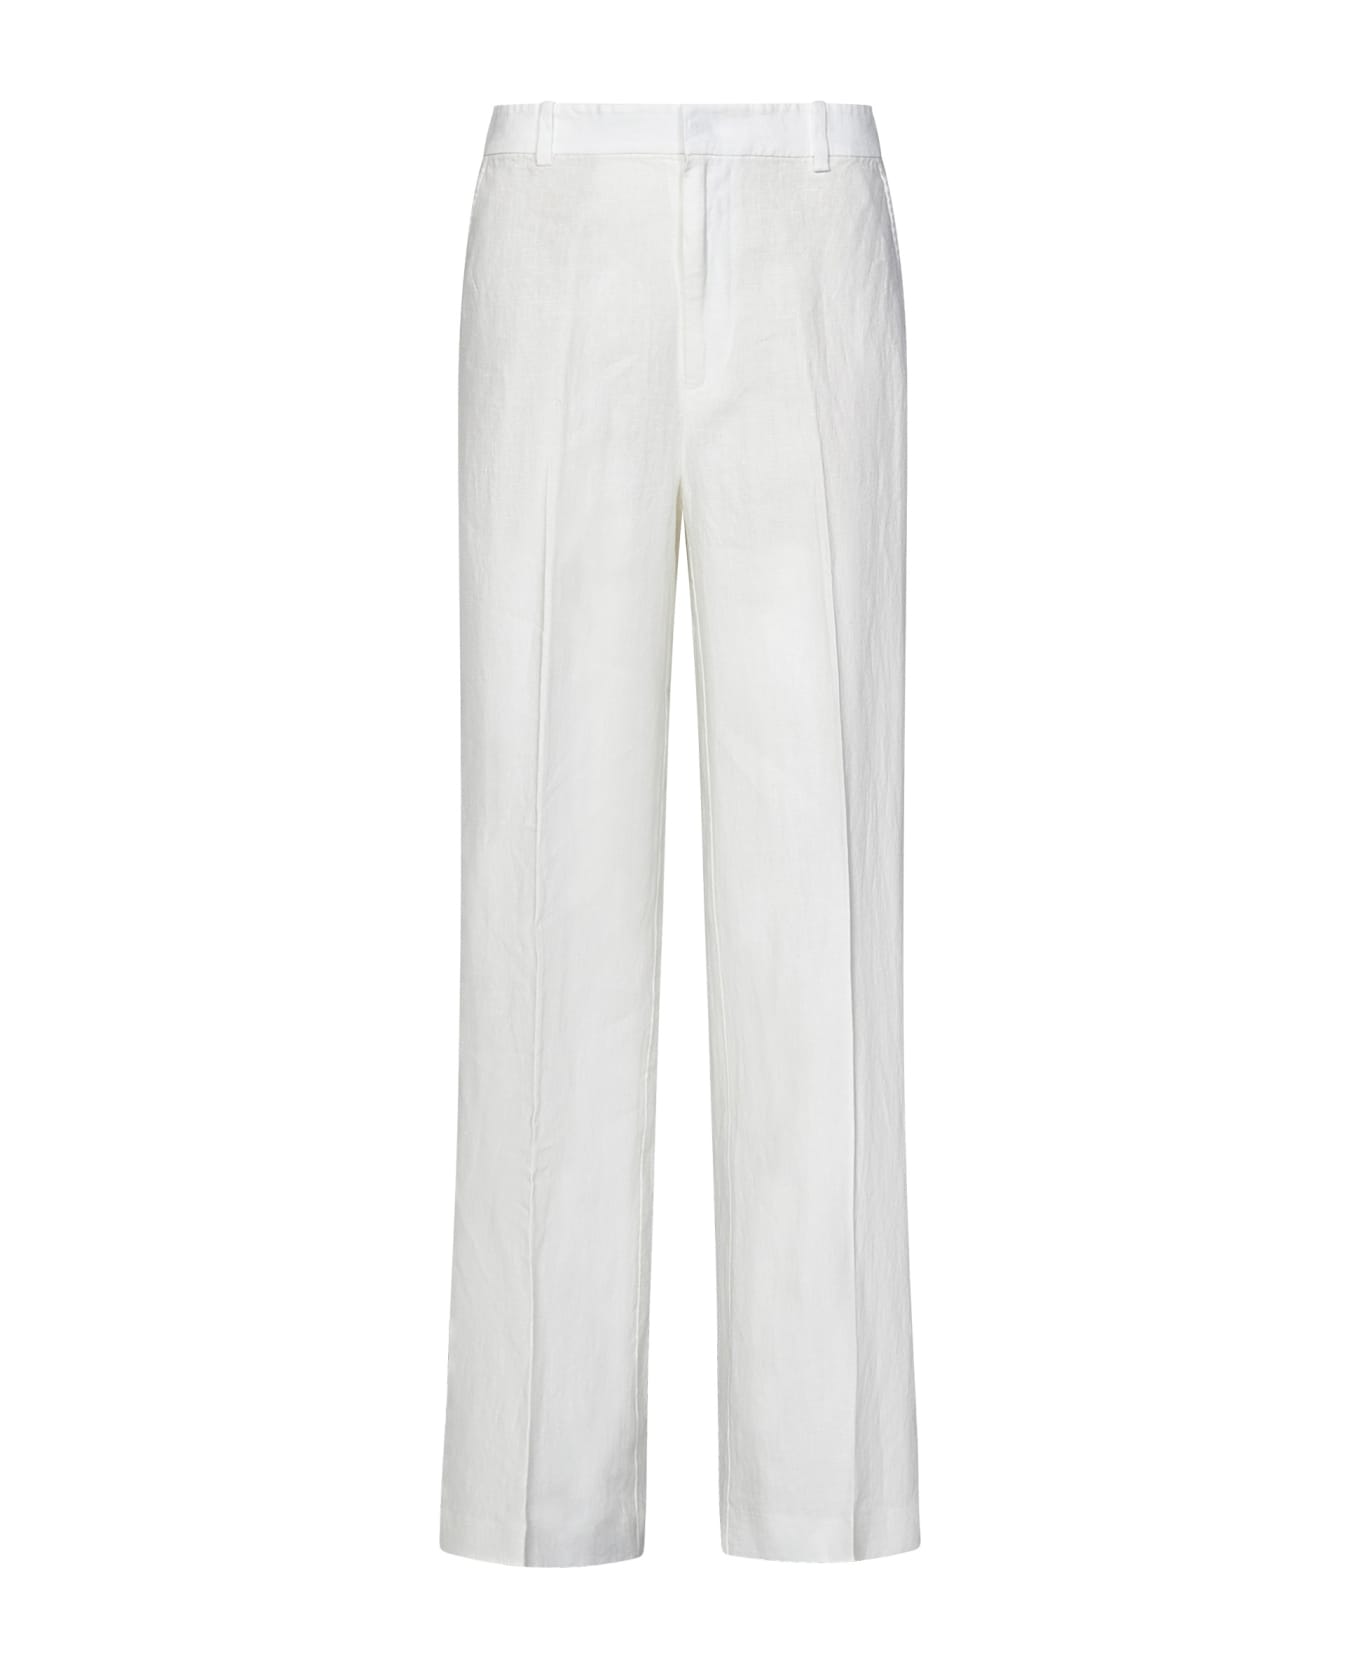 Polo Ralph Lauren Ralph Lauren Trousers - White